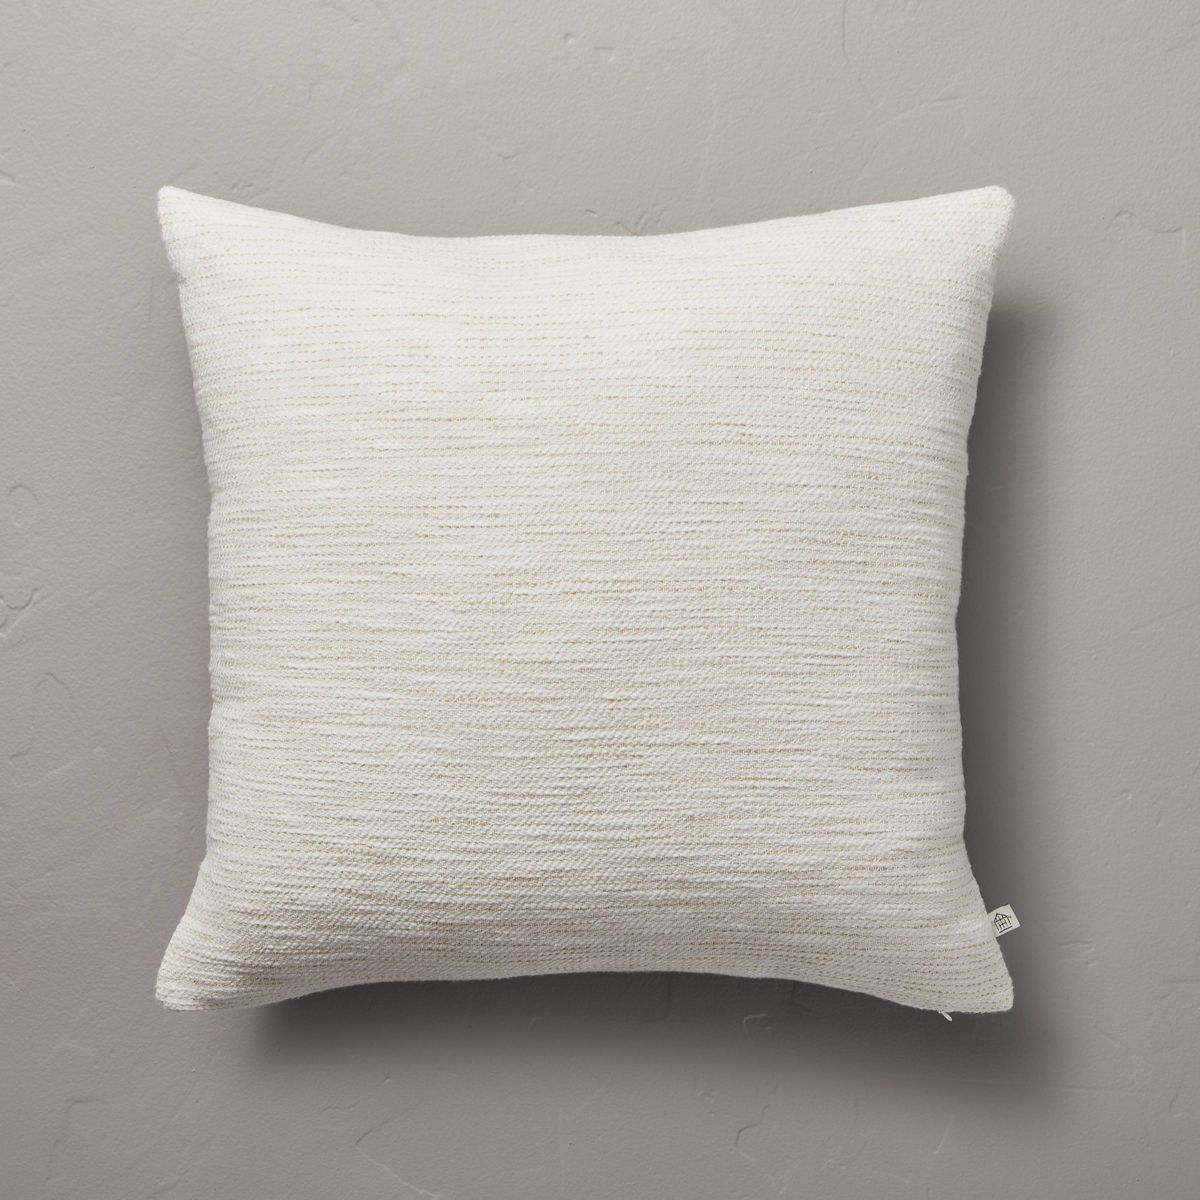 Textured Slub Stripe Square Throw Pillow Cream/Khaki - Hearth & Hand™ with Magnolia | Target